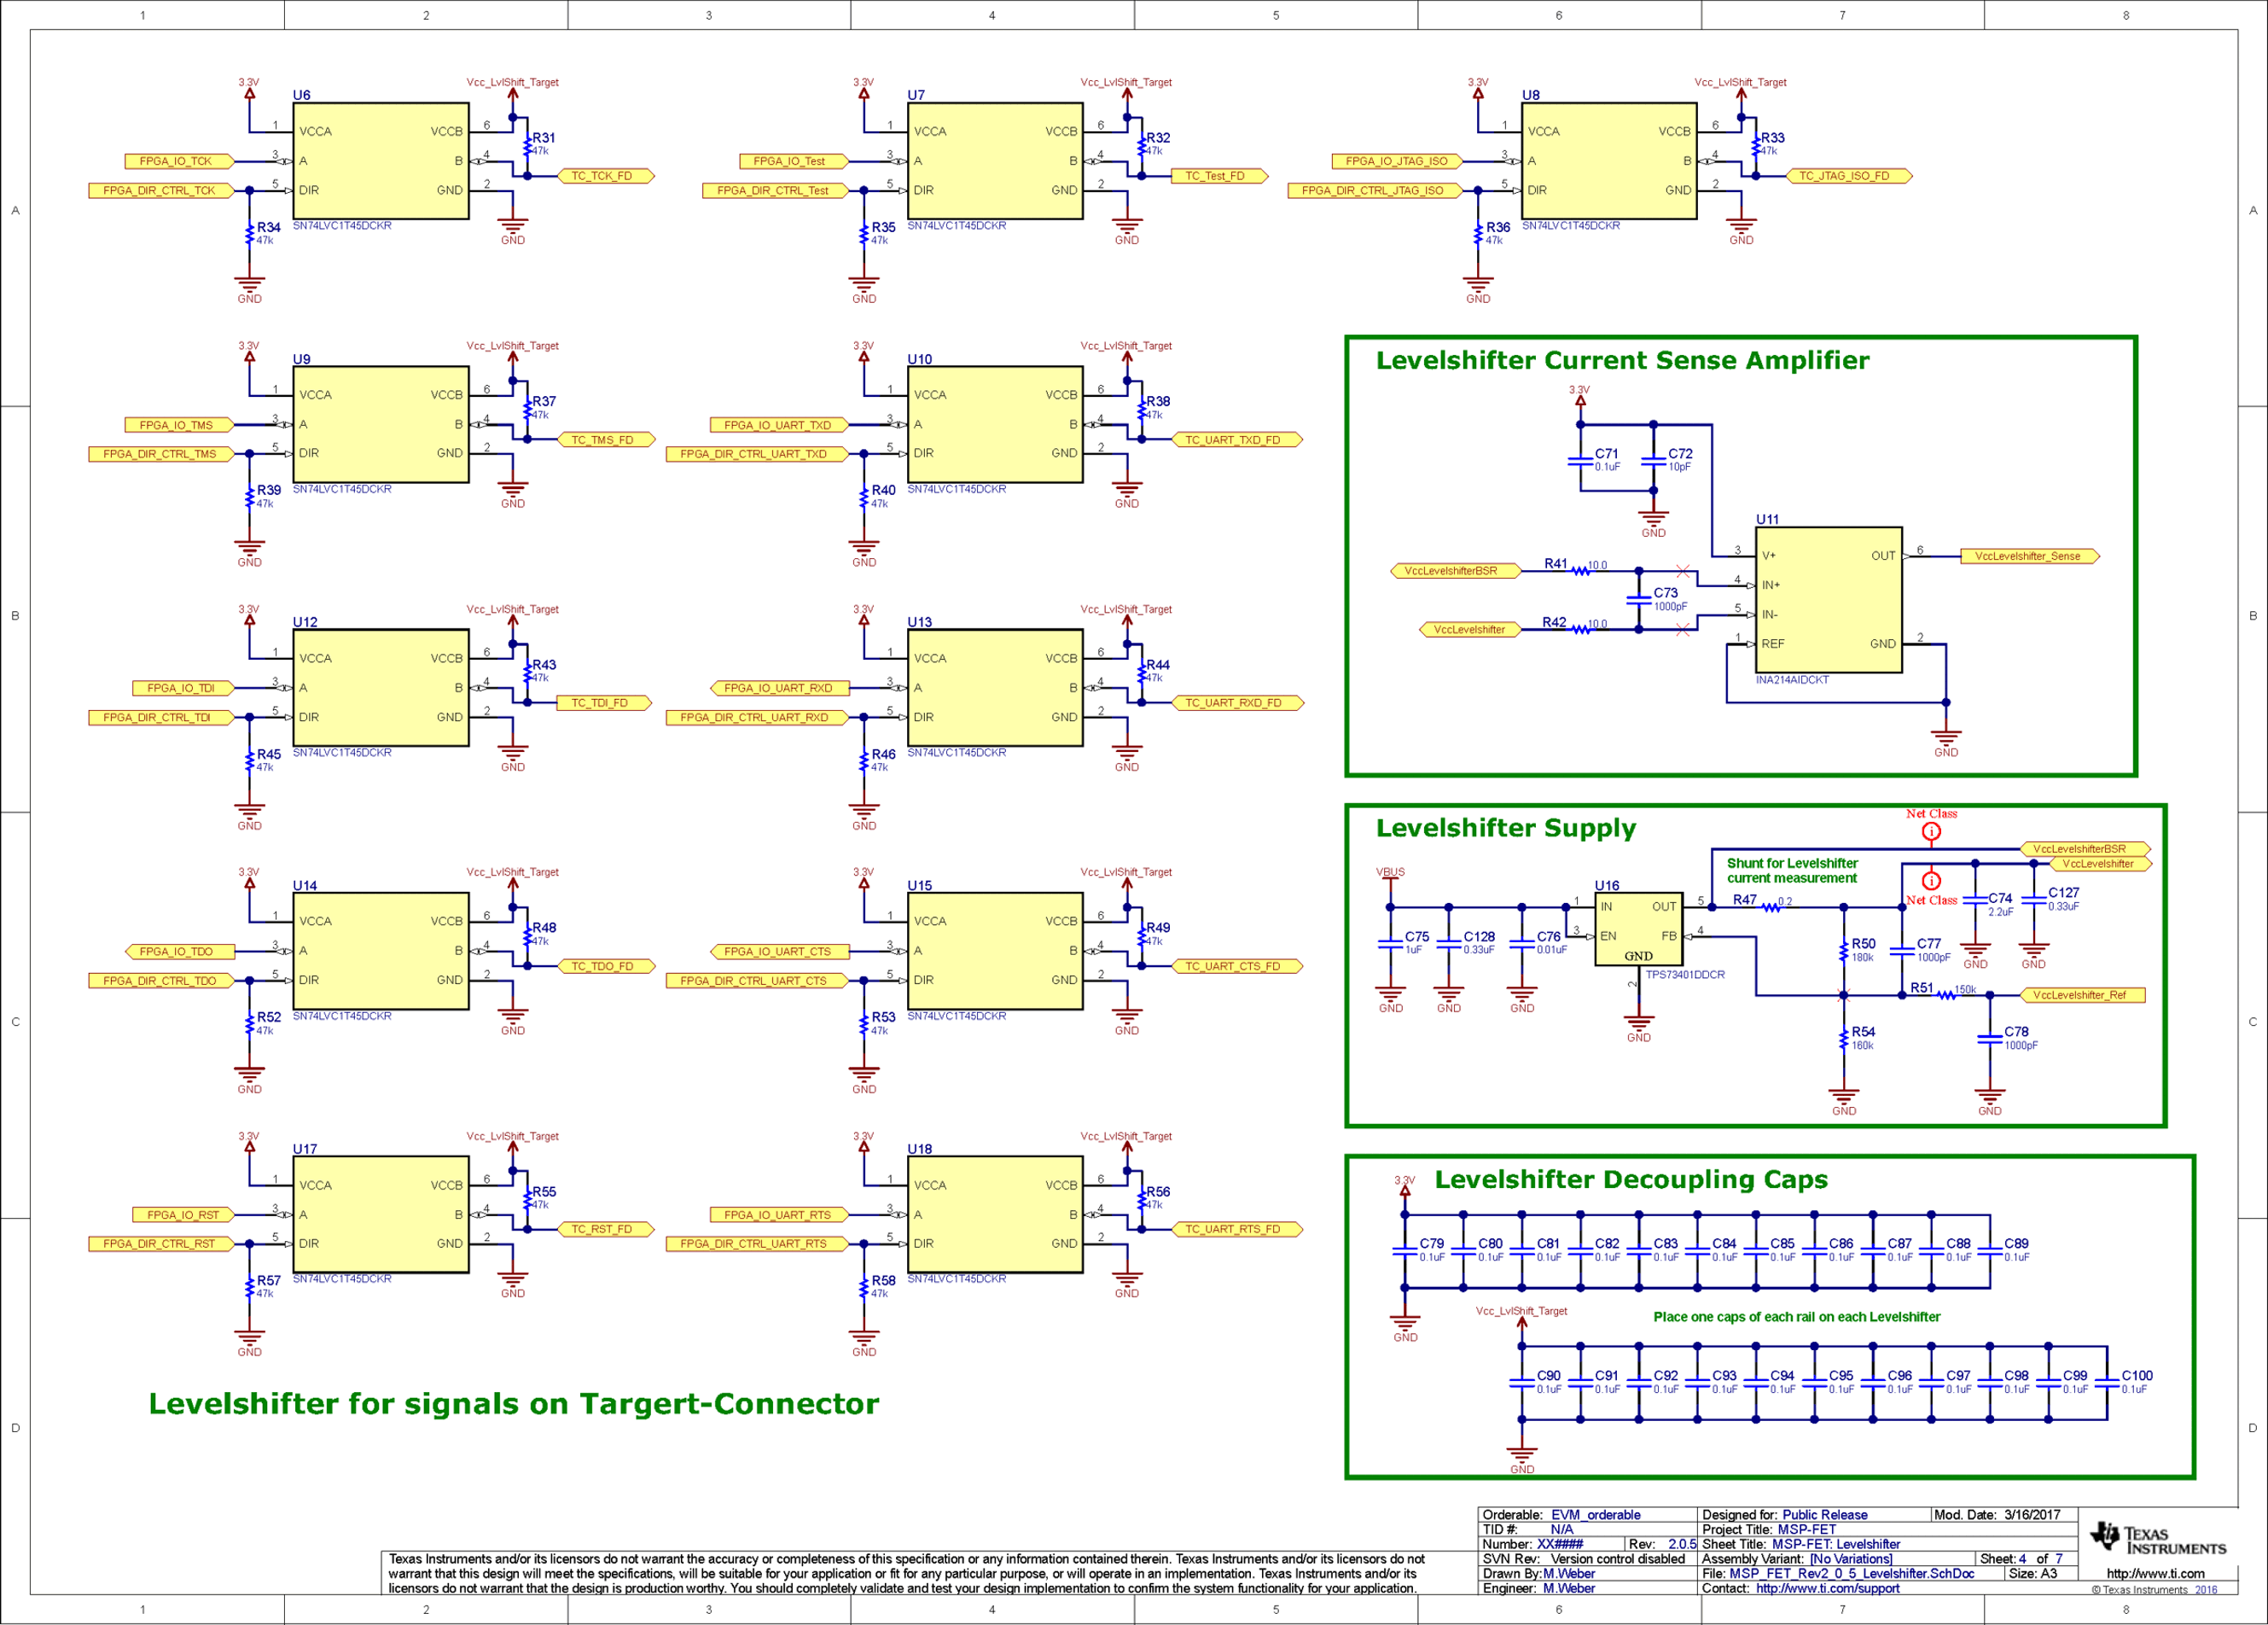 schematic-msp-fet-rev2p5-4.png